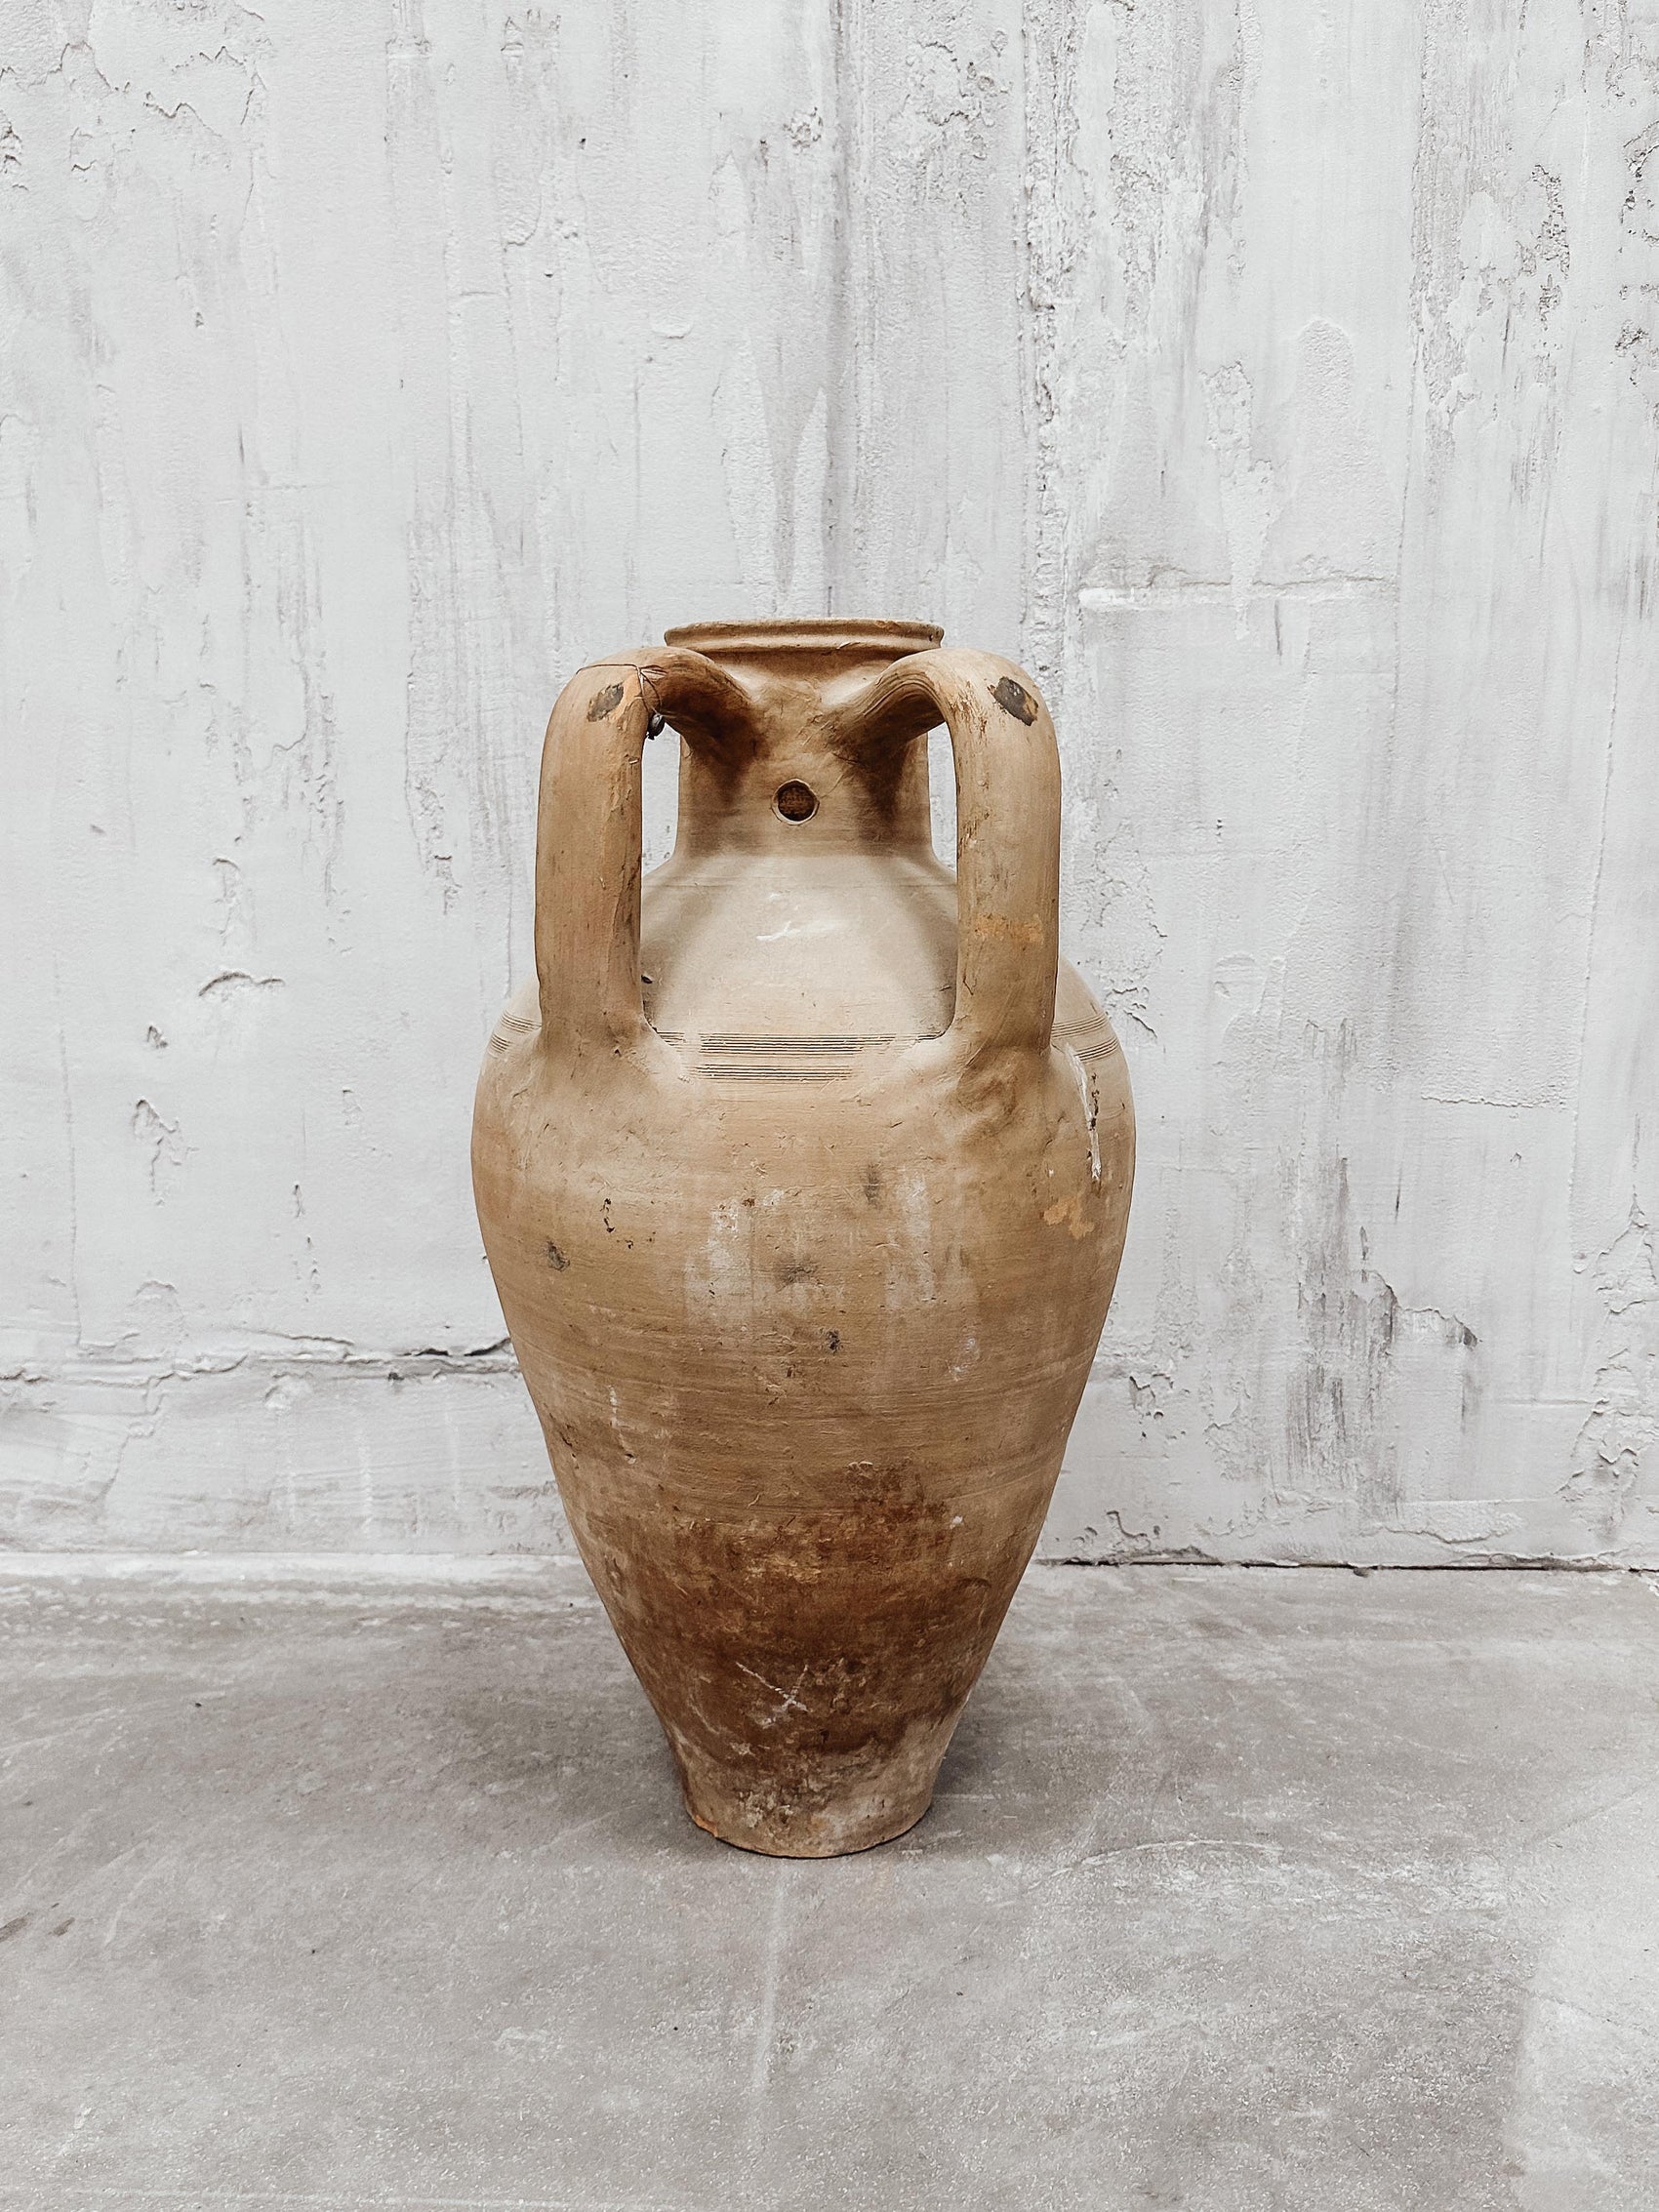 Rustic amphora